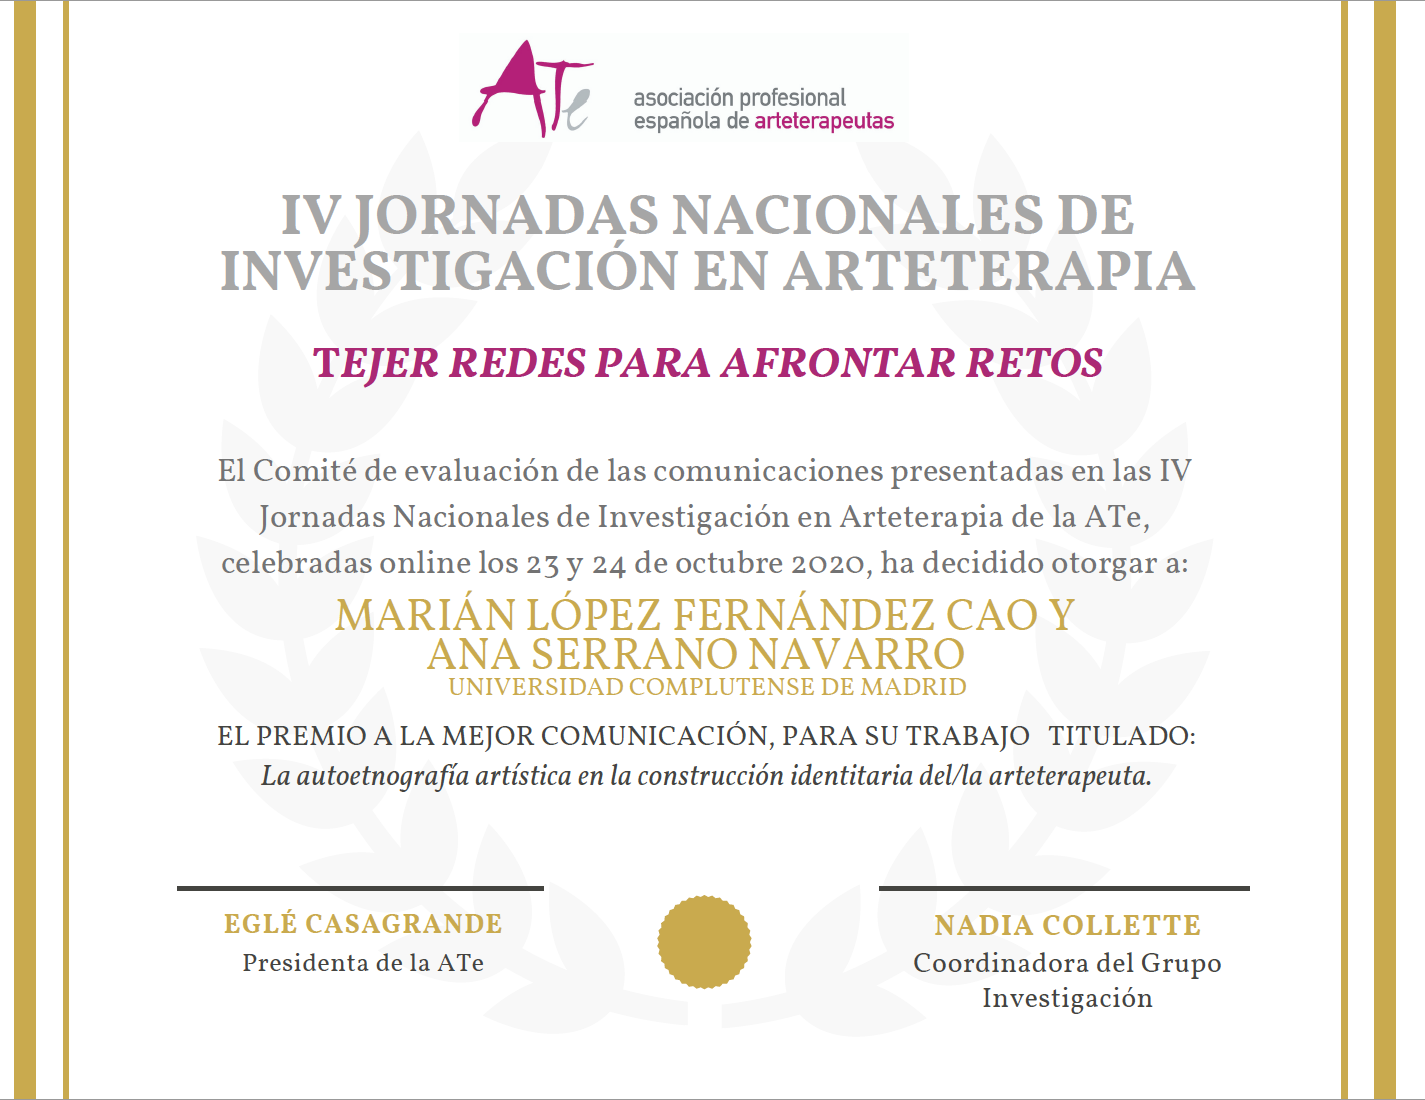 Premio de investigación para dos miembros de EARTDI: Ana Serrano y Marián López fdz. Cao